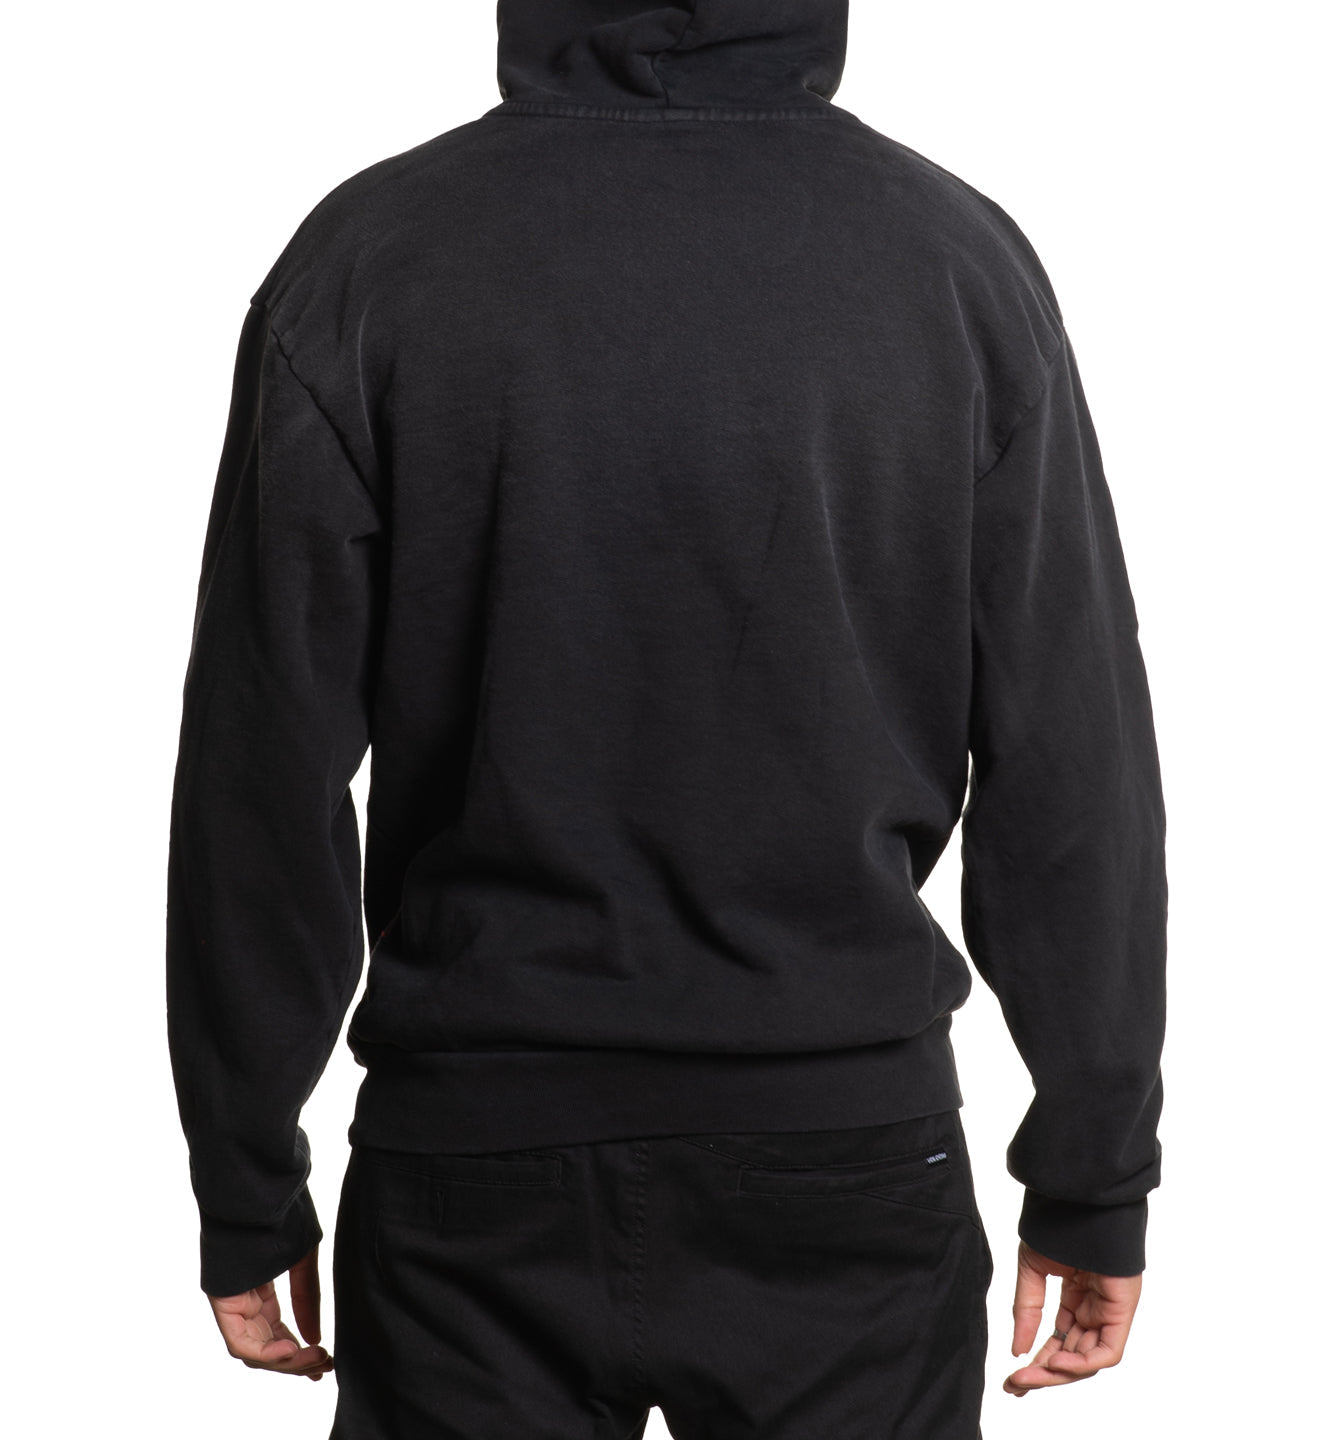 Mens Hooded Sweatshirts - Black Night Po Hood